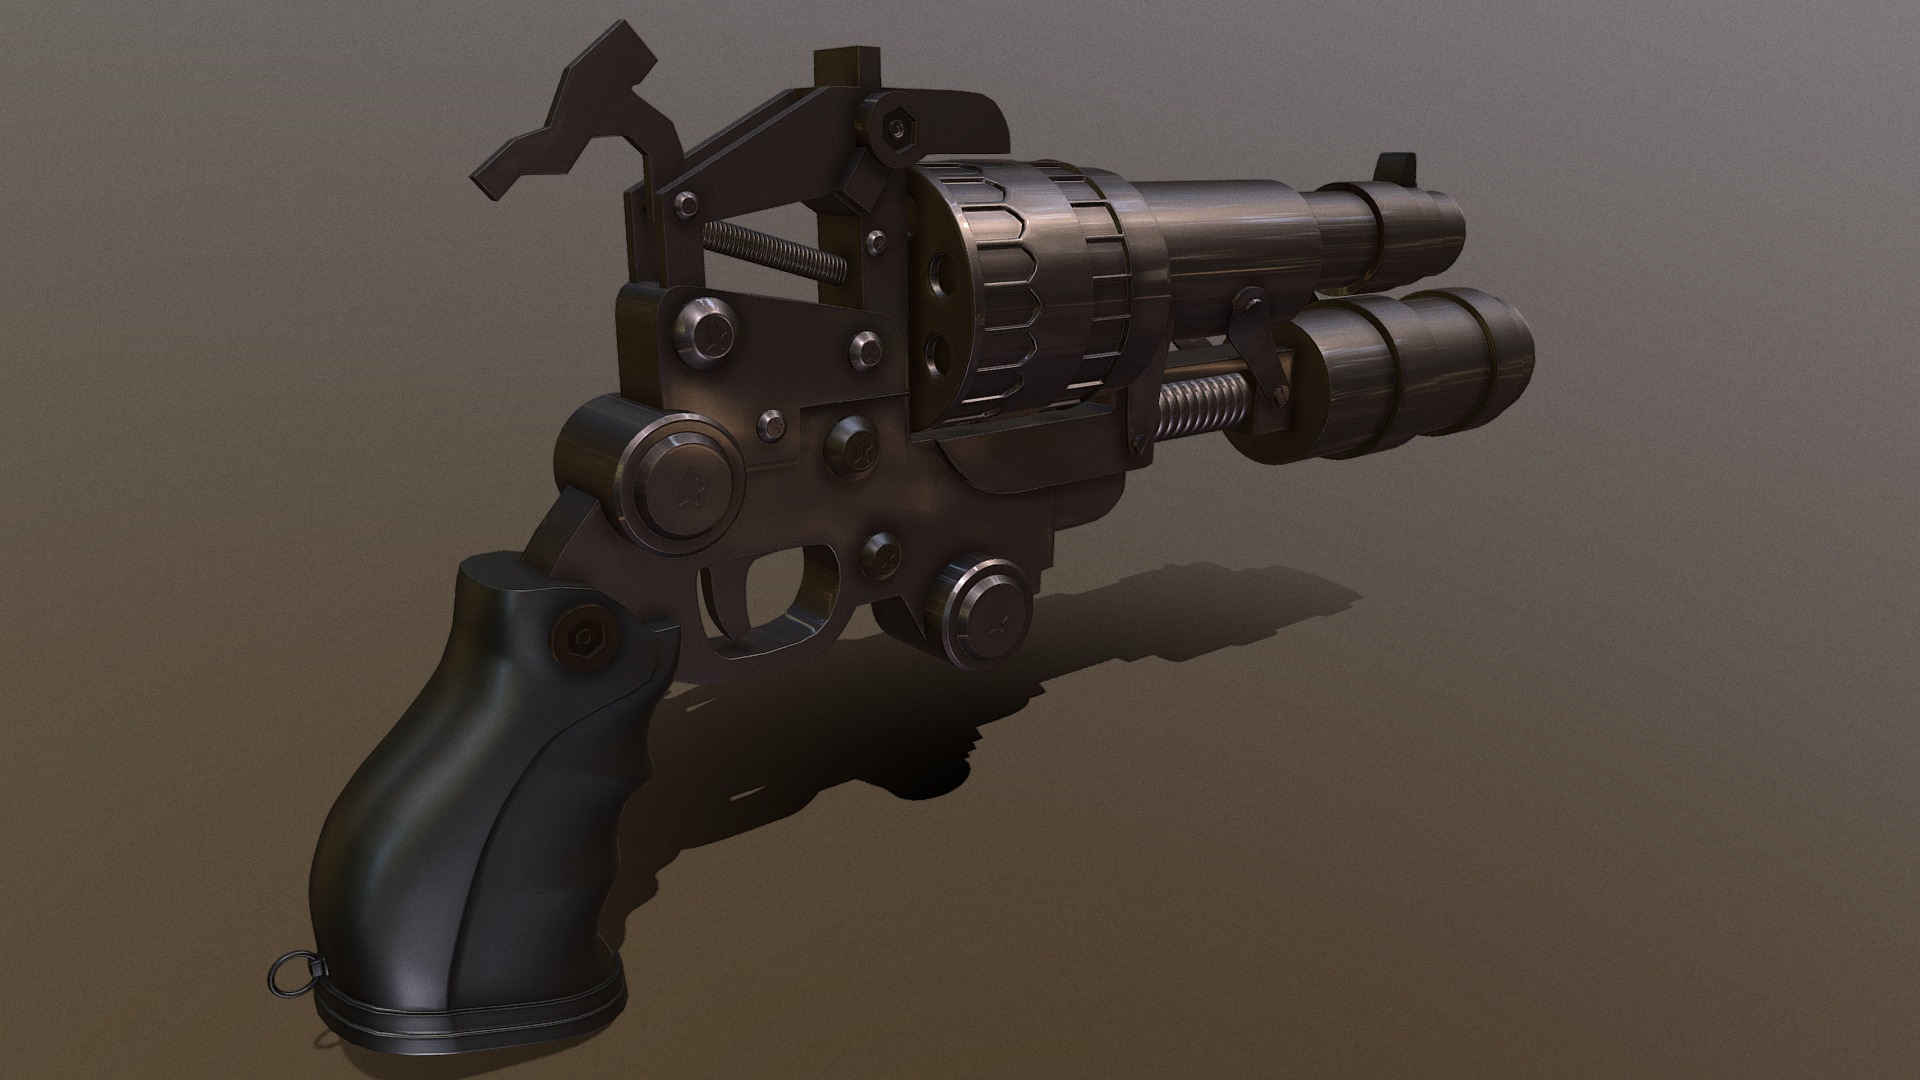 Realistic Revolver | 3D Model of gun
By Dipansu Sahu 3d model